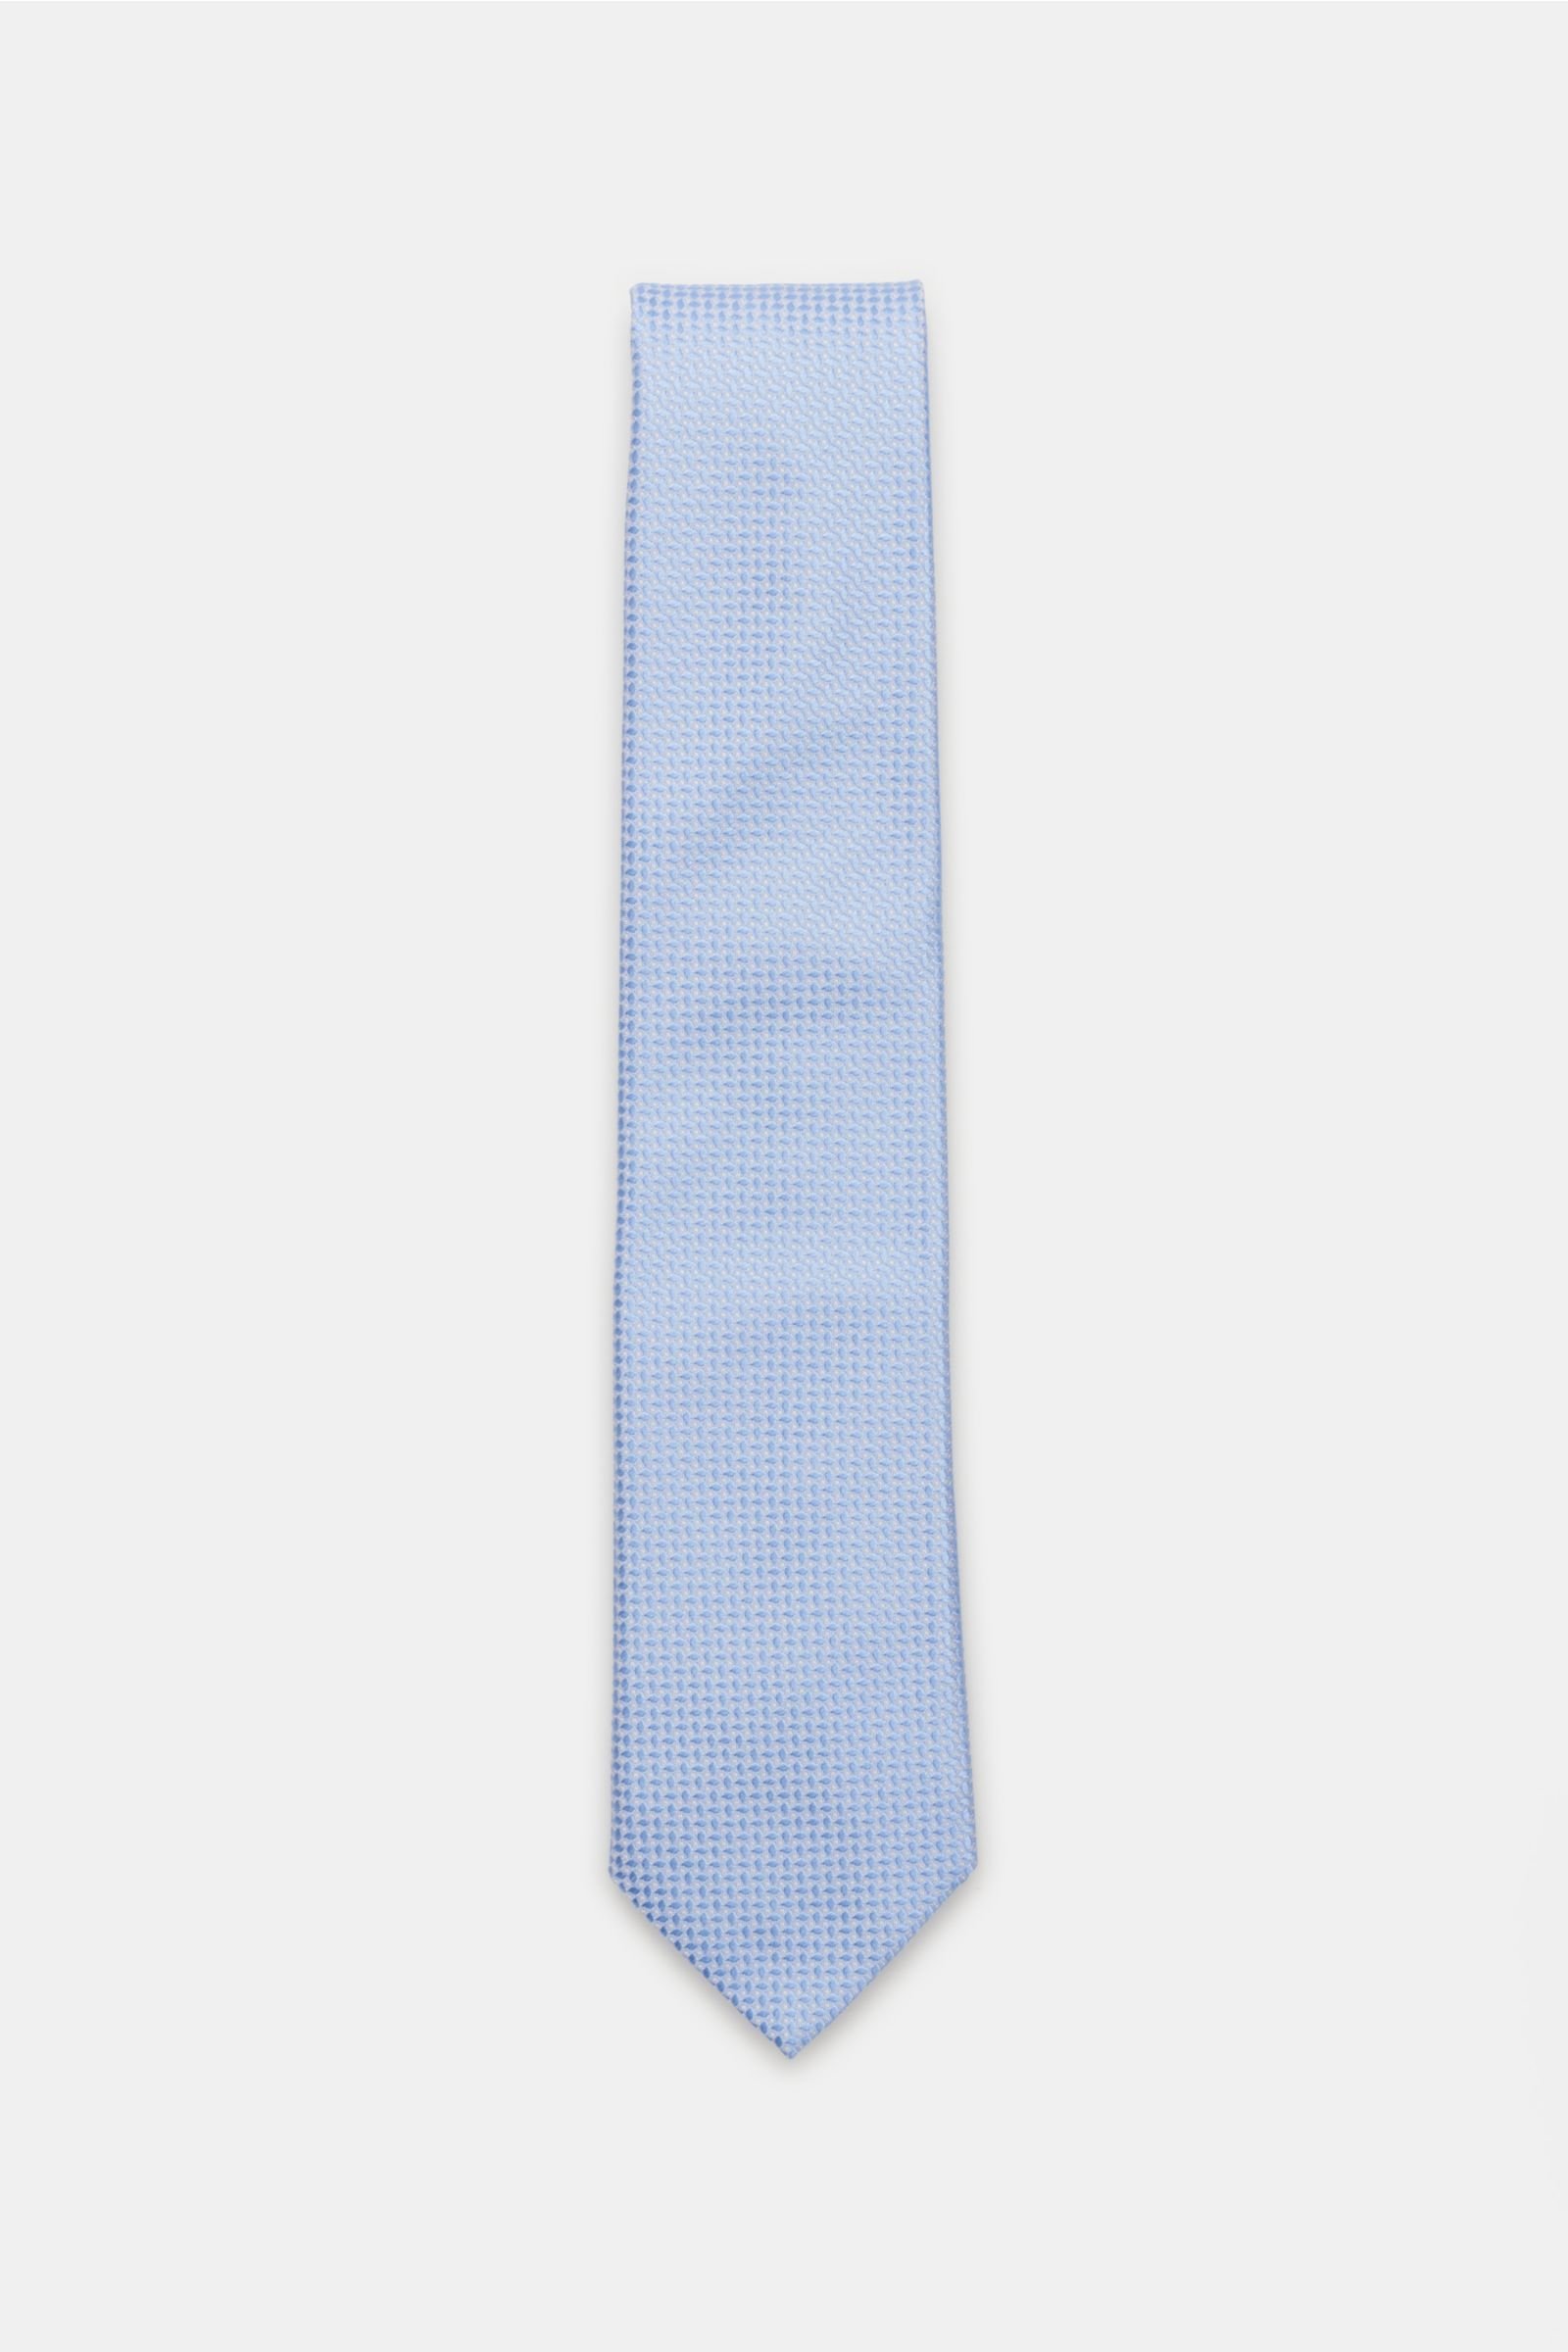 Silk tie pastel blue patterned